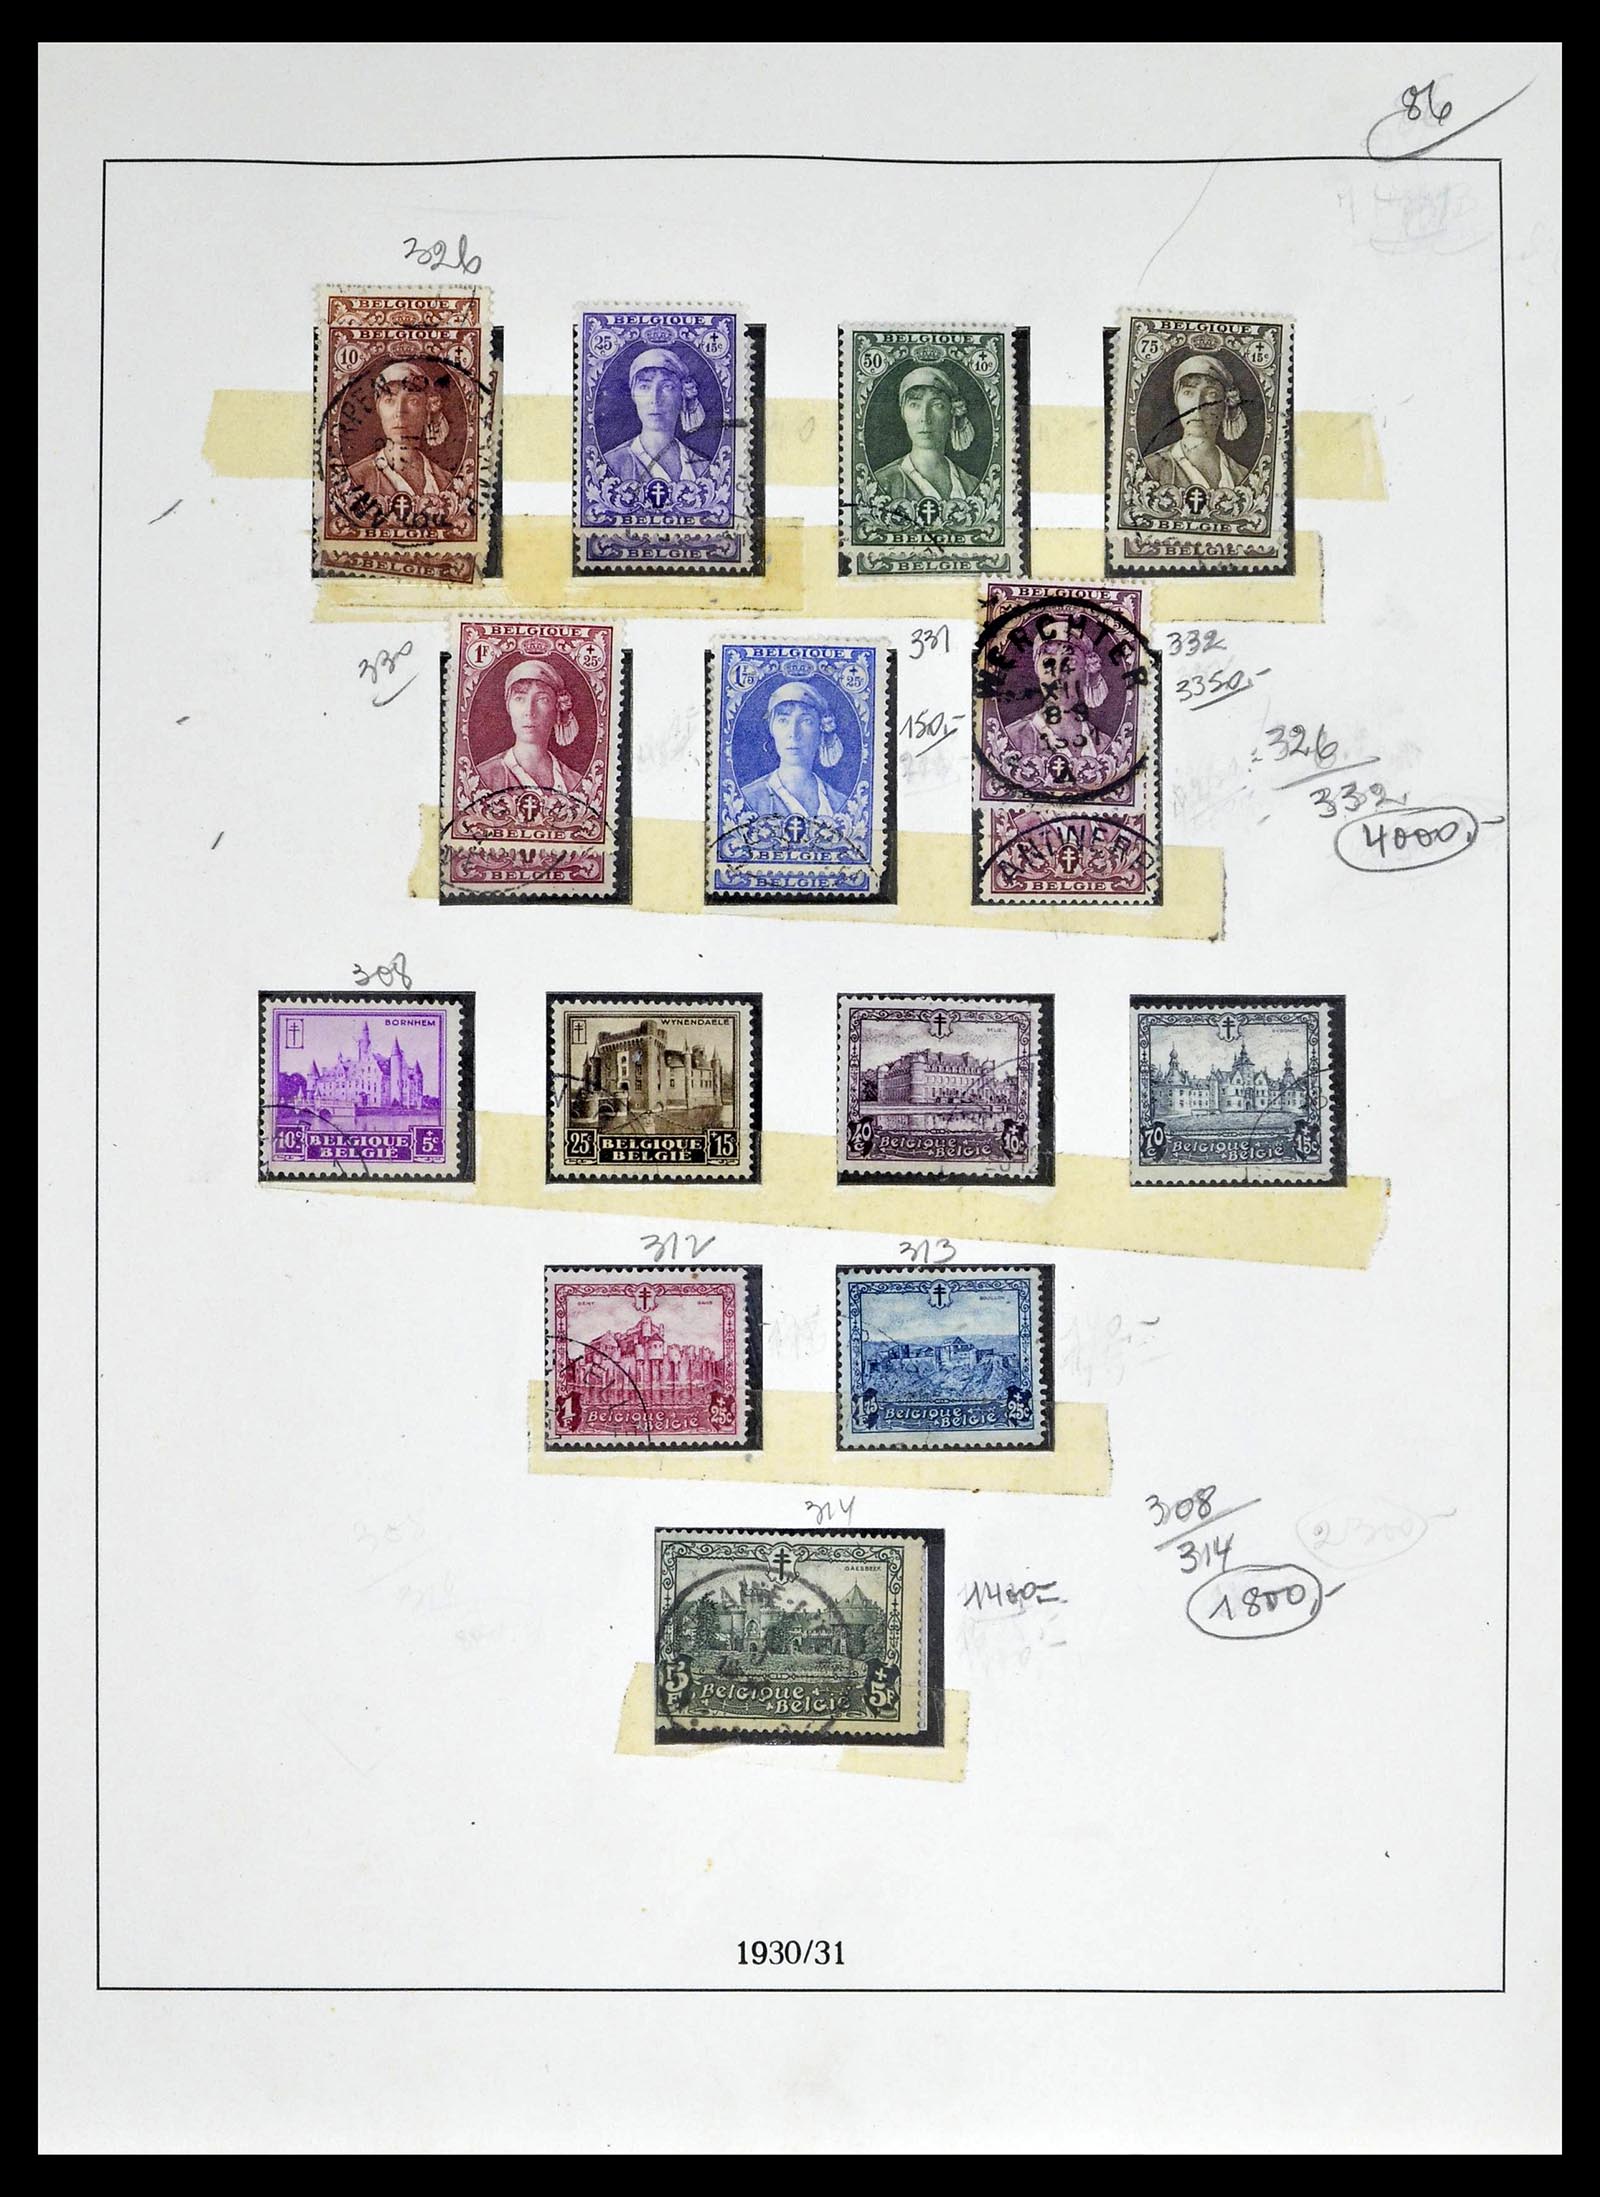 39265 0046 - Stamp collection 39265 Belgium 1849-1962.